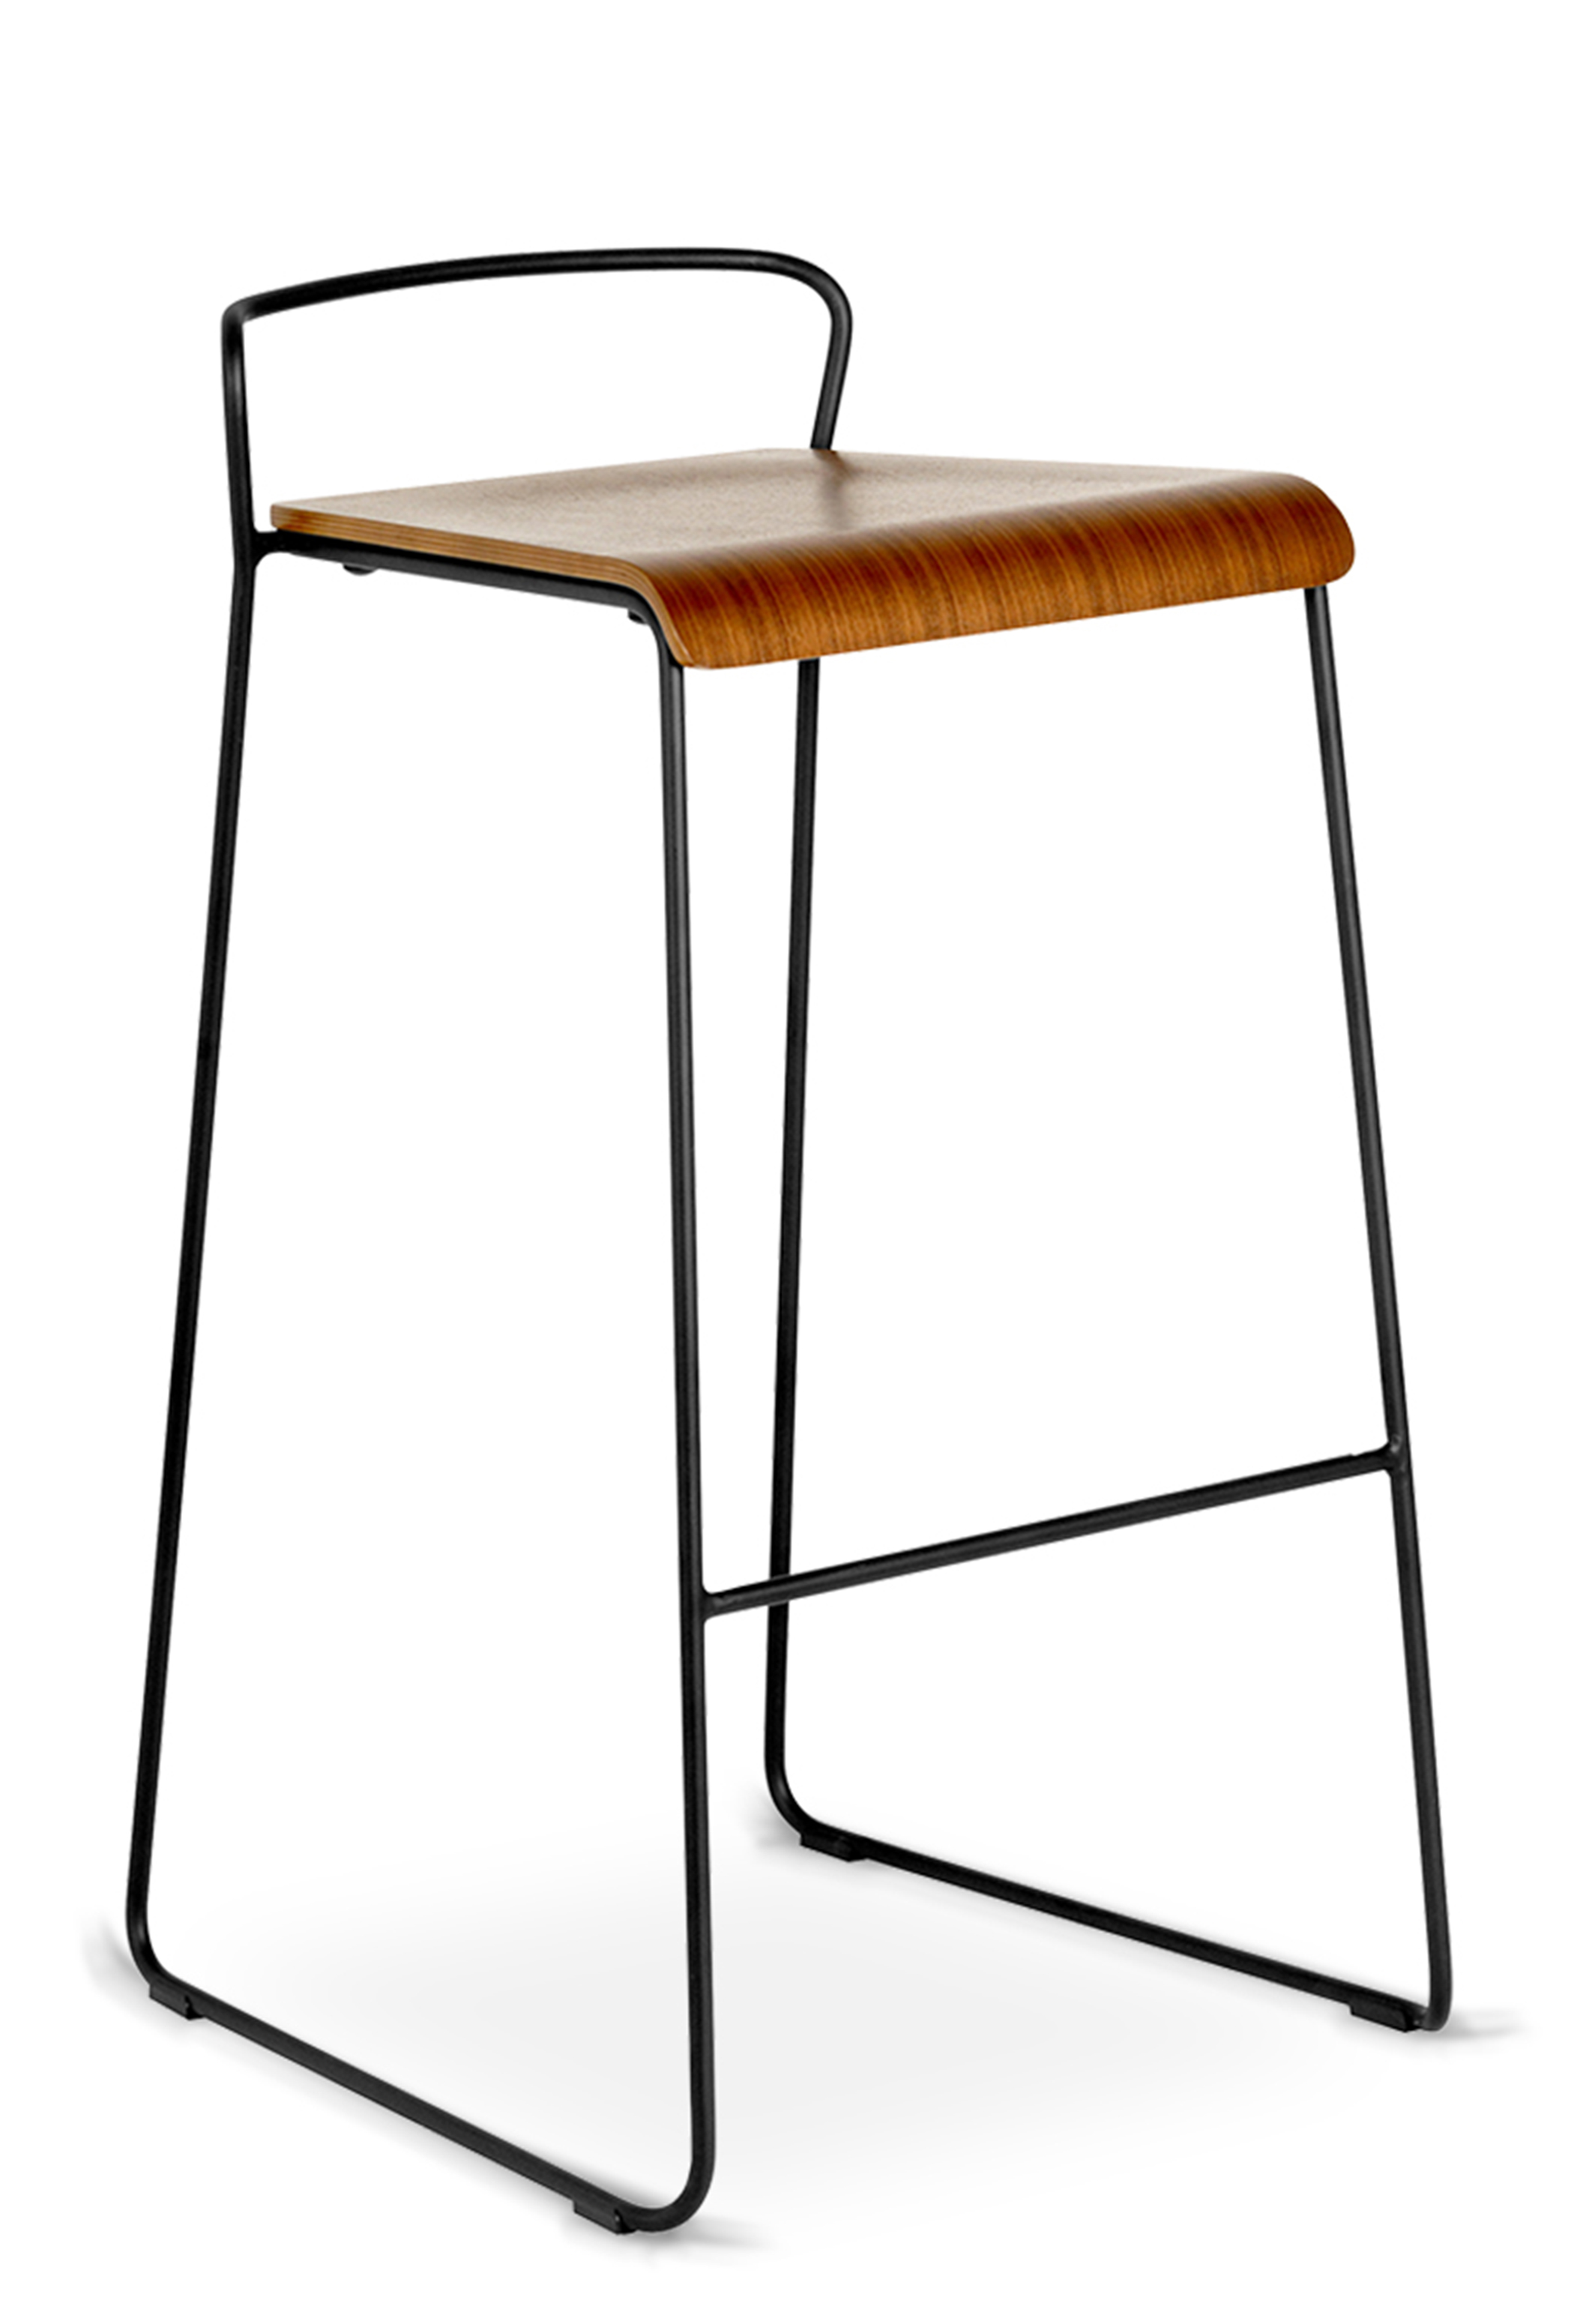 WS - Transit high stool - Walnut (Front angle)